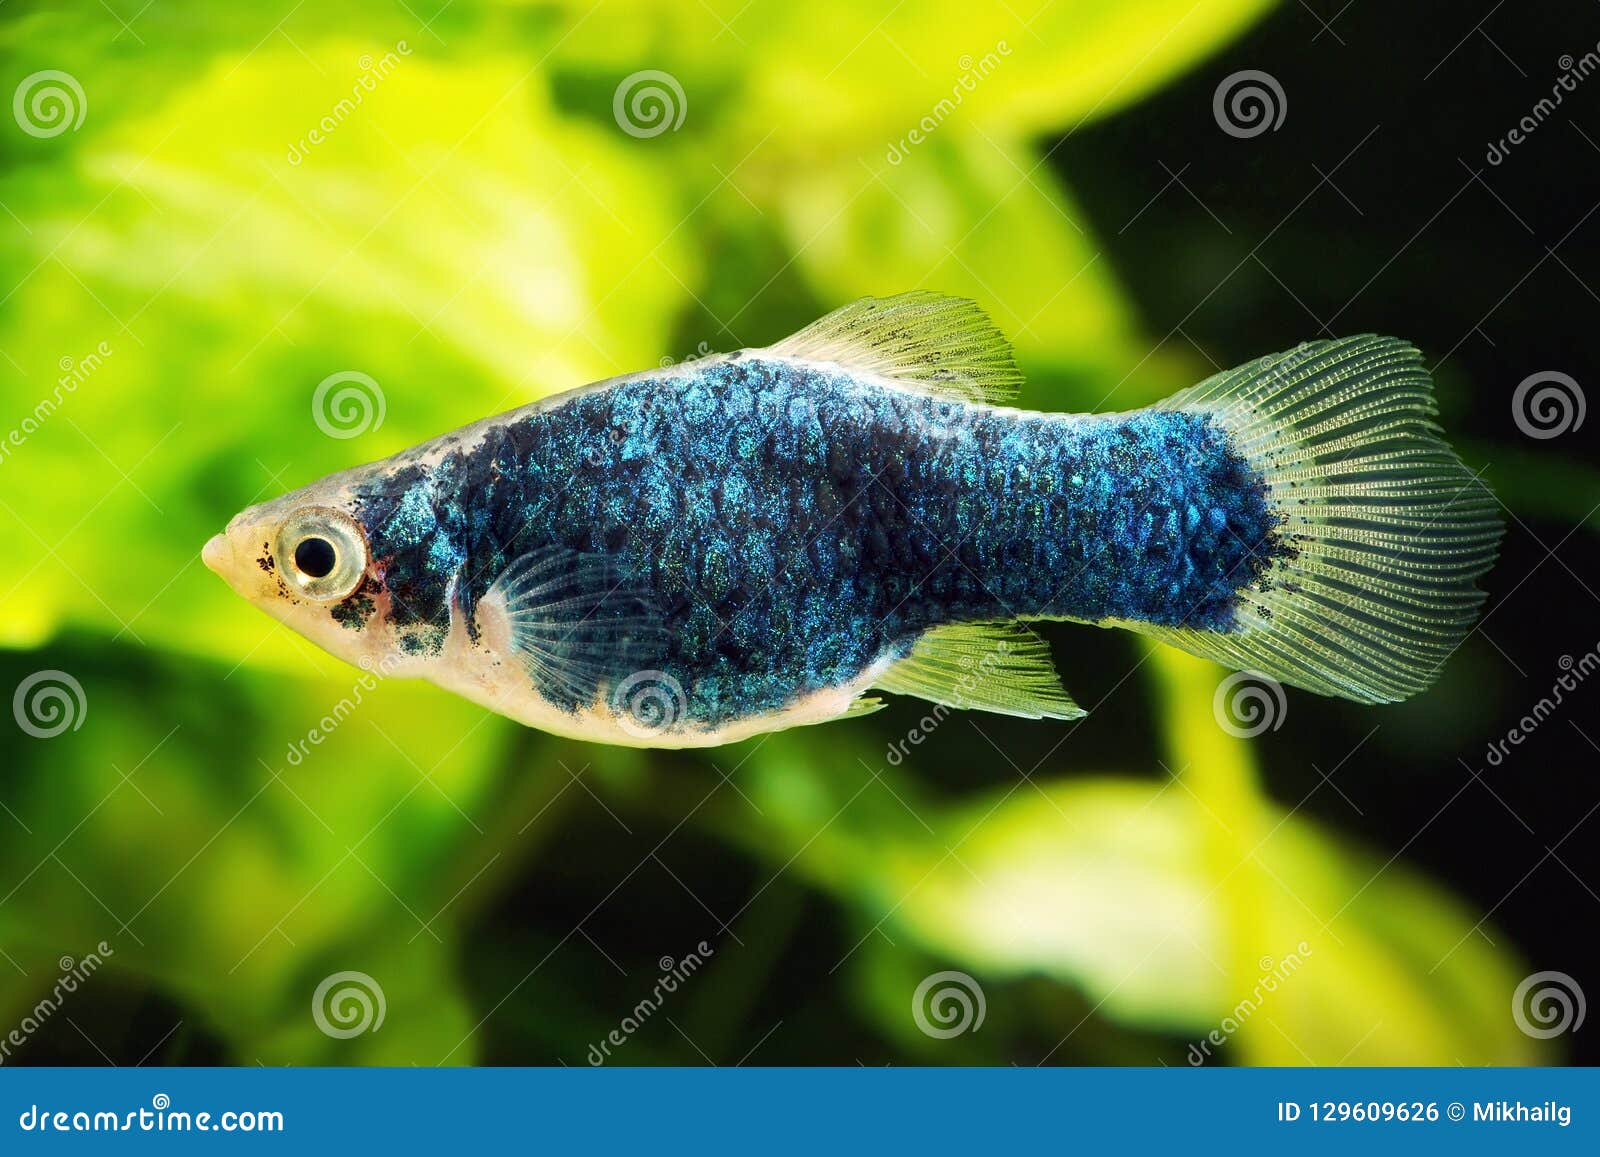 black blue platy fish